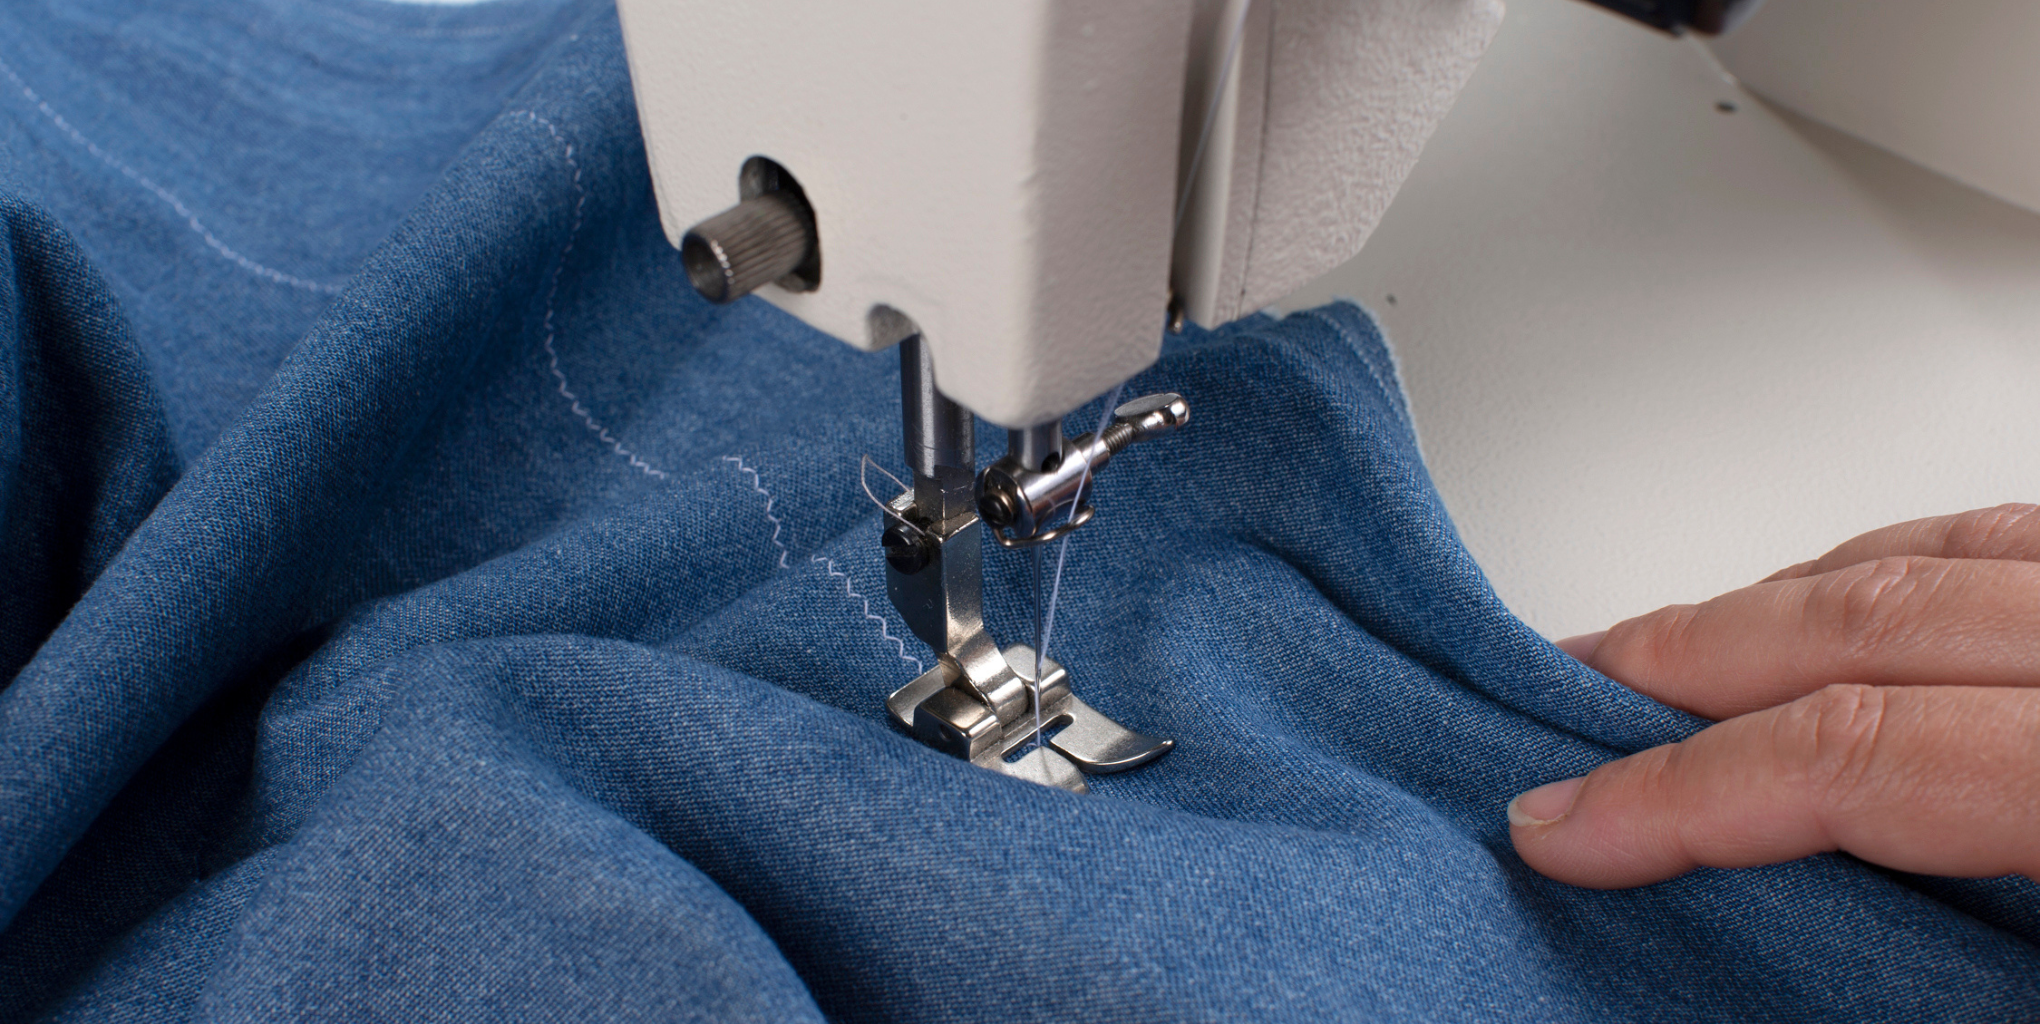 Sewing Indigo Denim Jeans Sewing Machine Stock Photo 680099878 |  Shutterstock